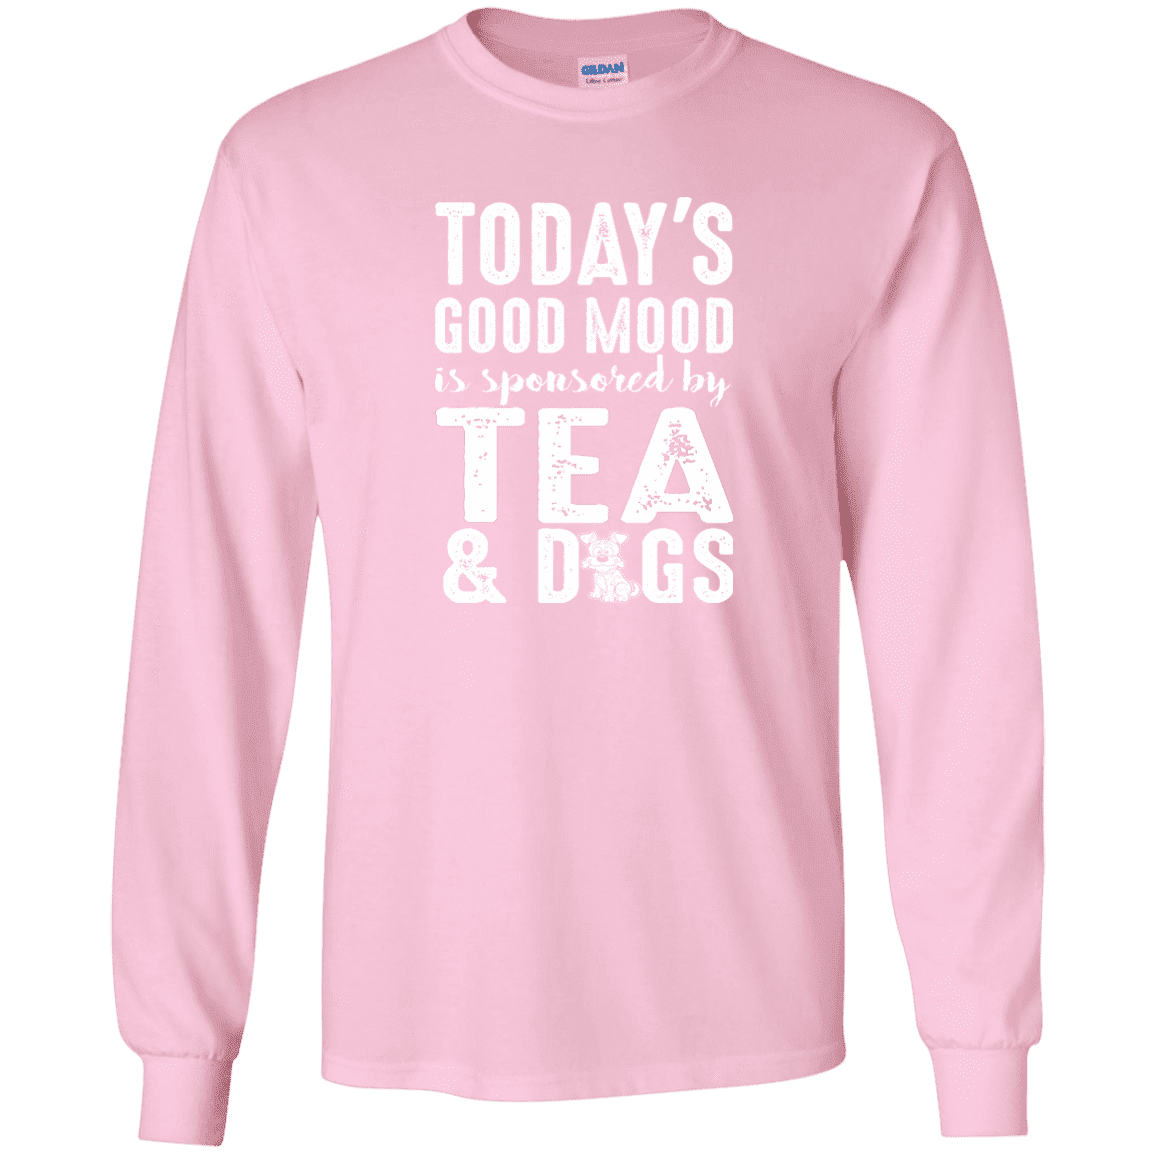 Today's Good Mood Tea & Dogs - Long Sleeve T Shirt.